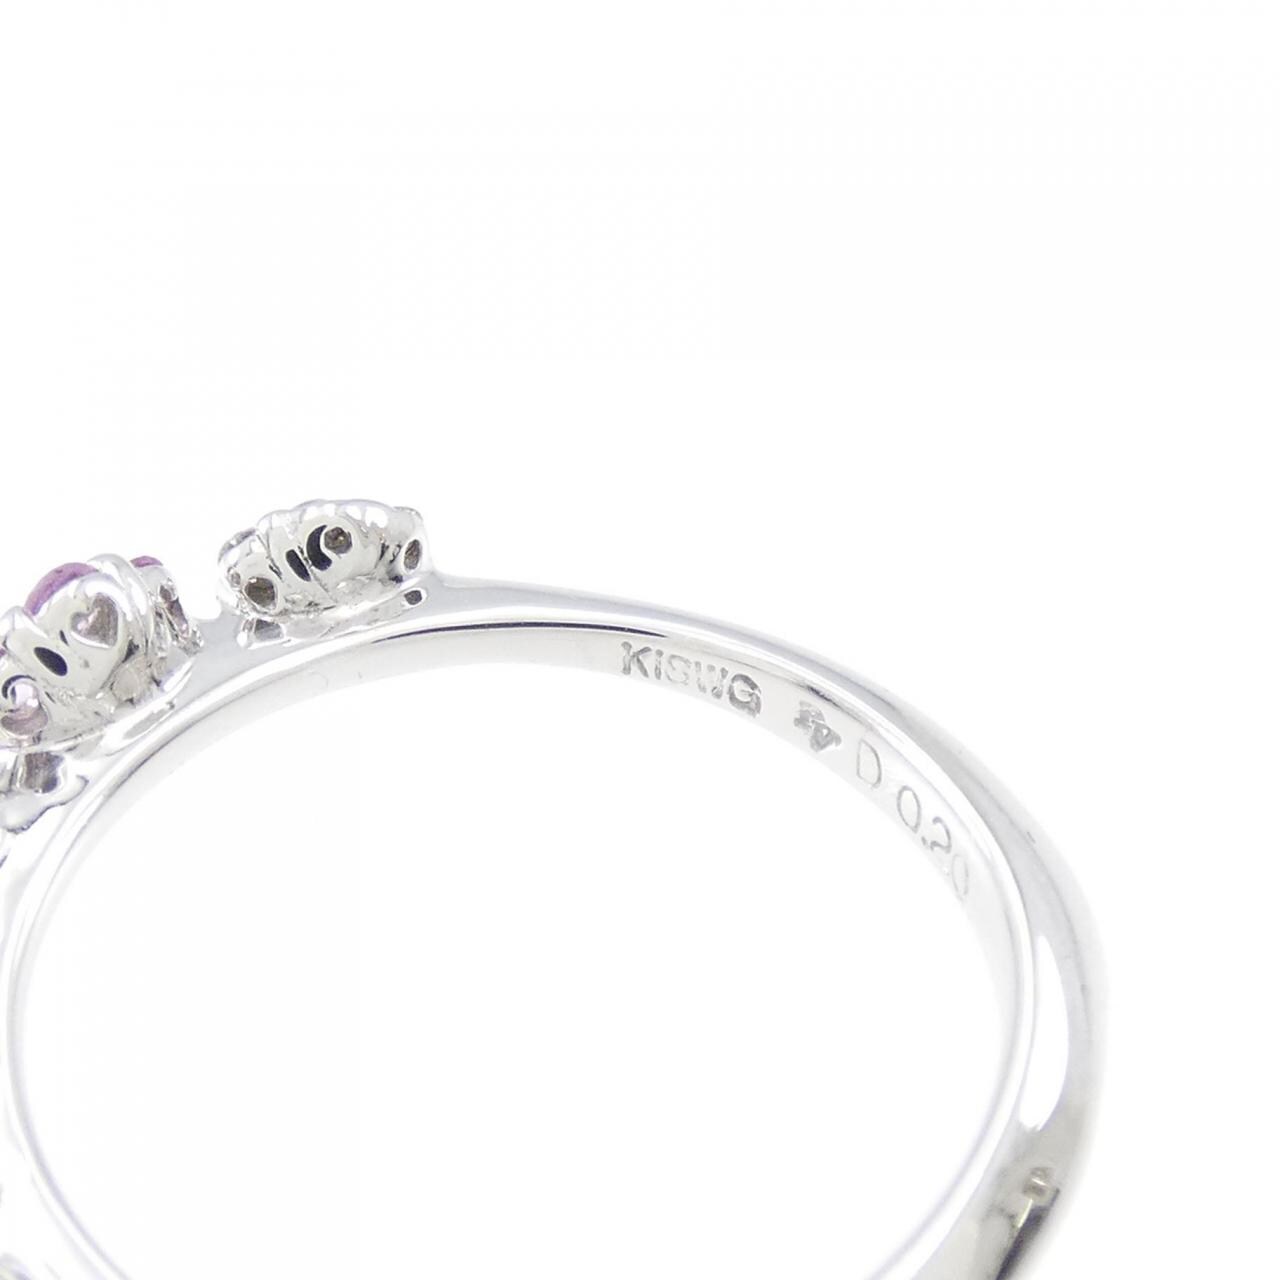 PONTE VECCHIO Flower Sapphire Ring 0.28CT